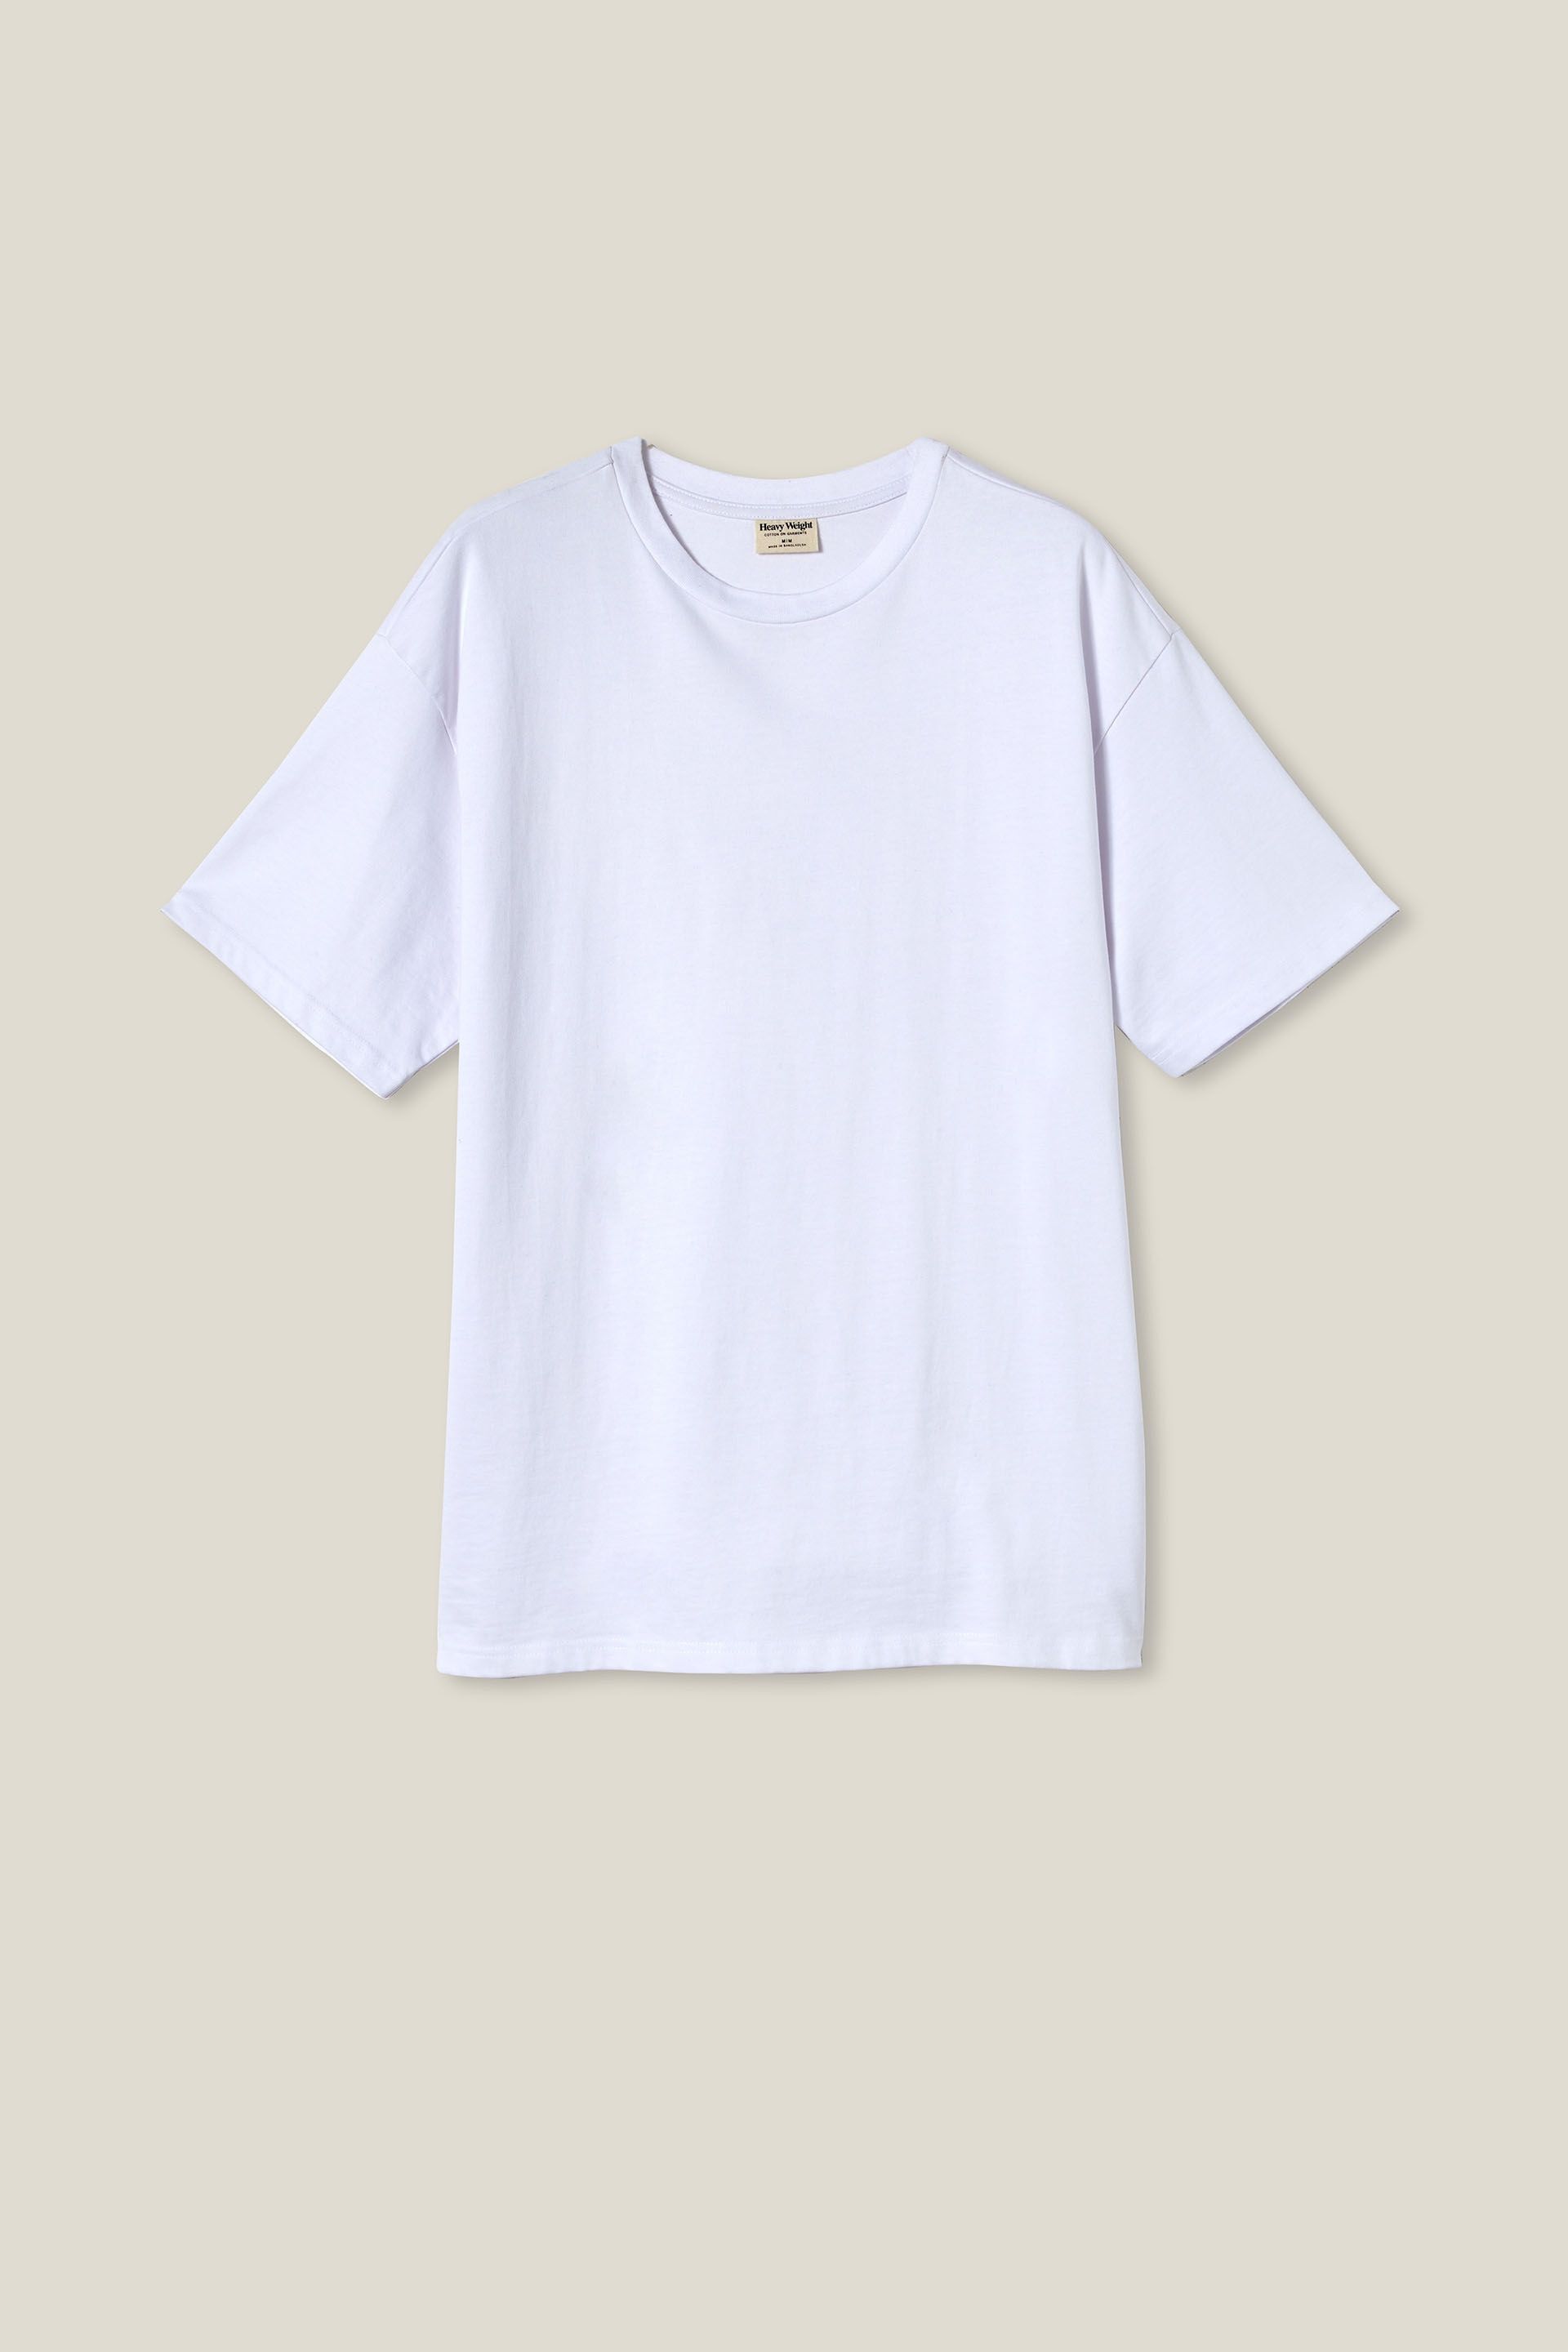 Premium Men's T Shirt's Start Designing